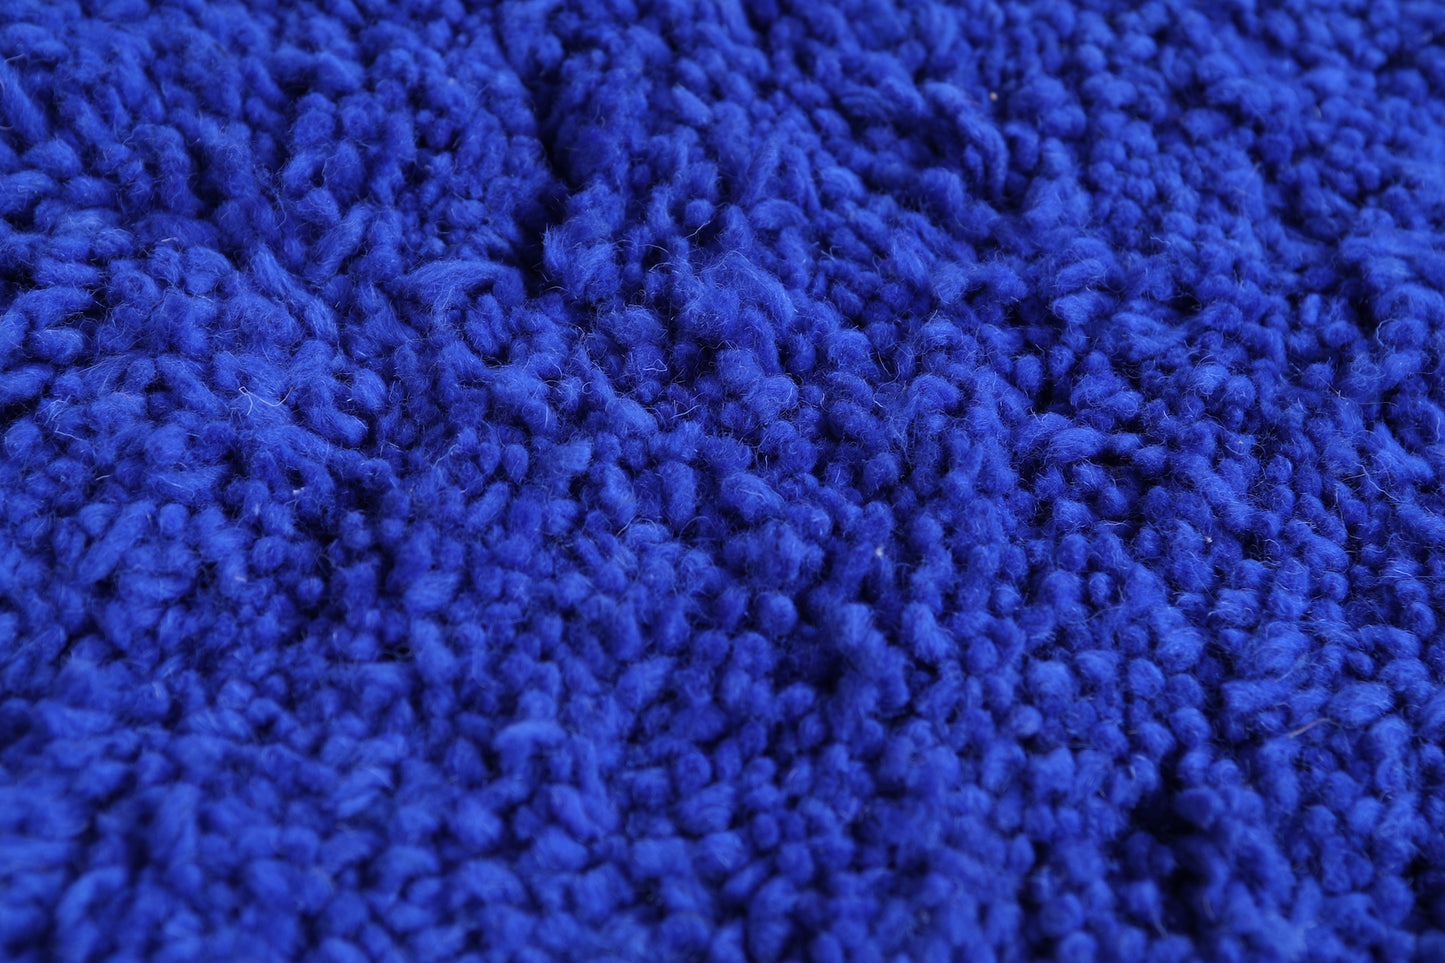 Round berber handmade rug - Custom blue wool rug